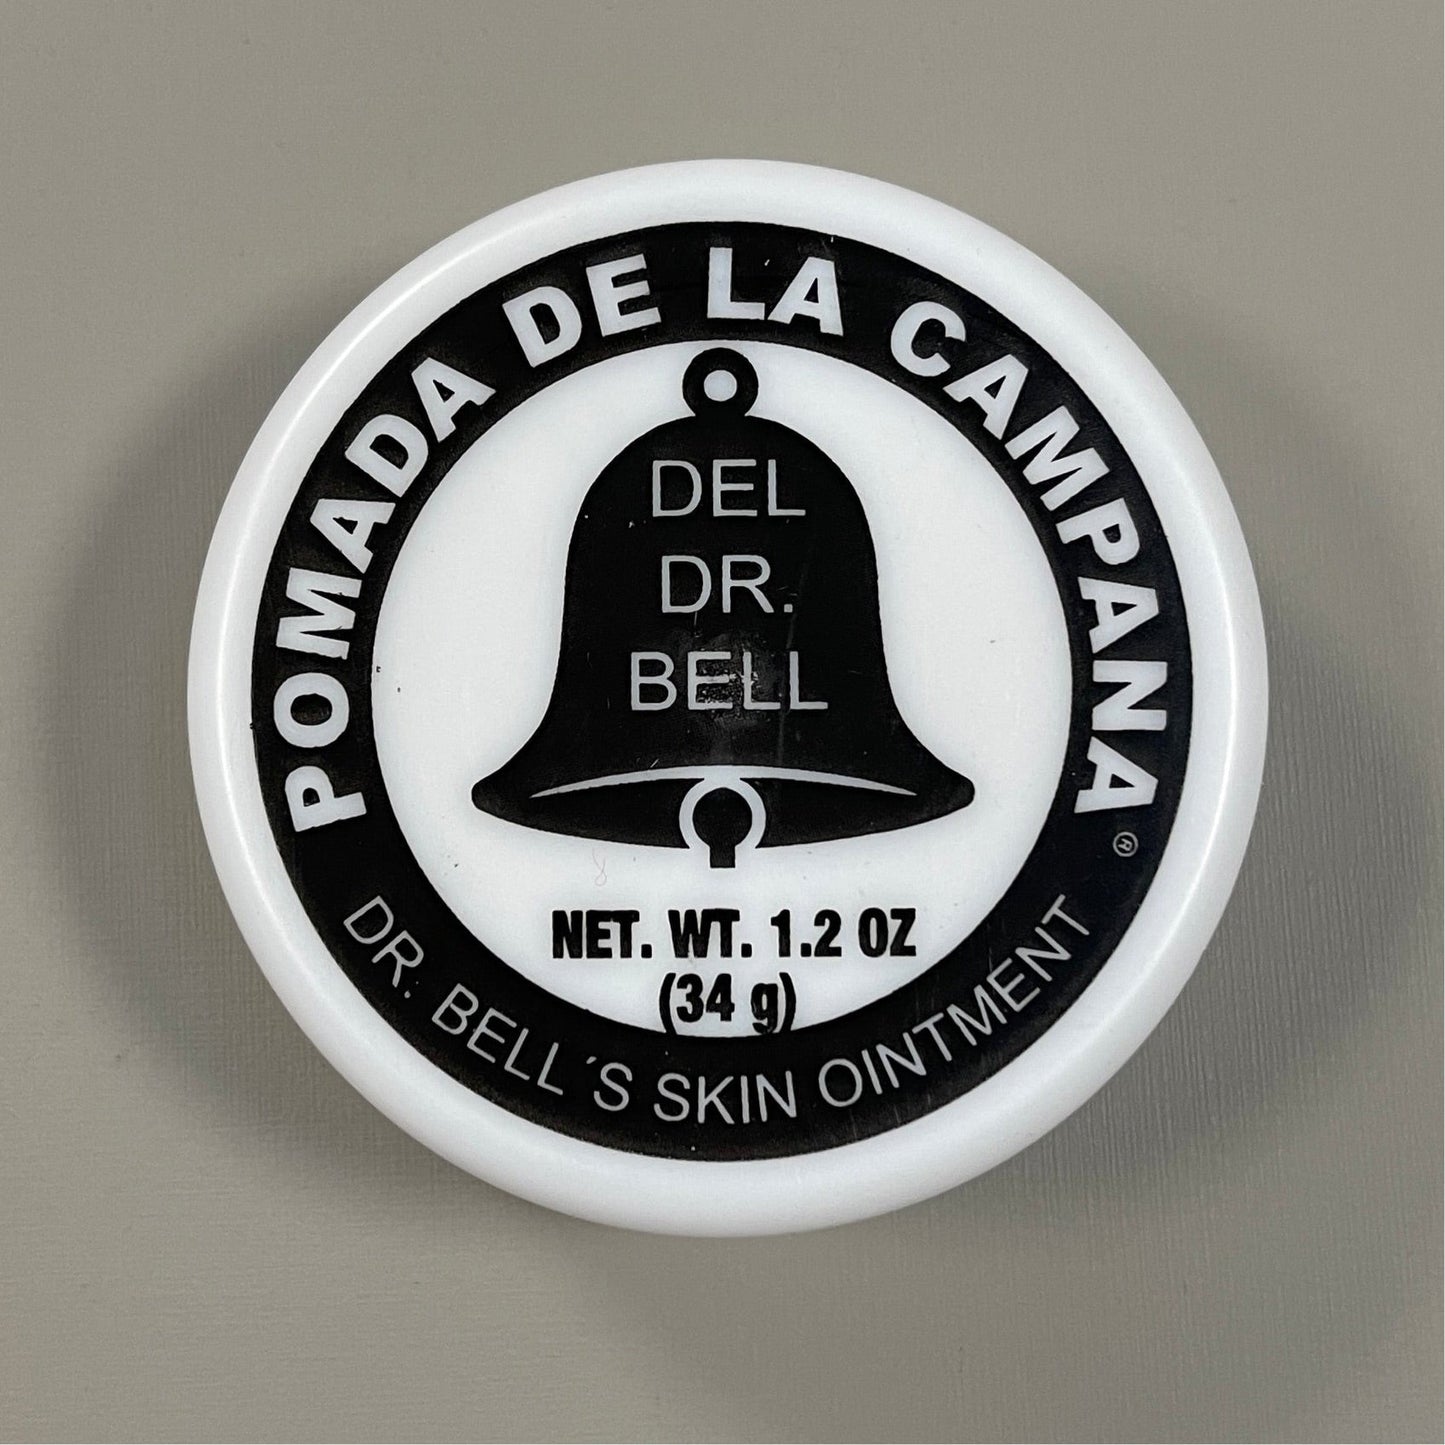 ZA@ DR. BELL’S POMADA DE LA CAMPANA (6-Pack) Skin Ointment Sz 1.2 oz BBD 12/23 (New) G